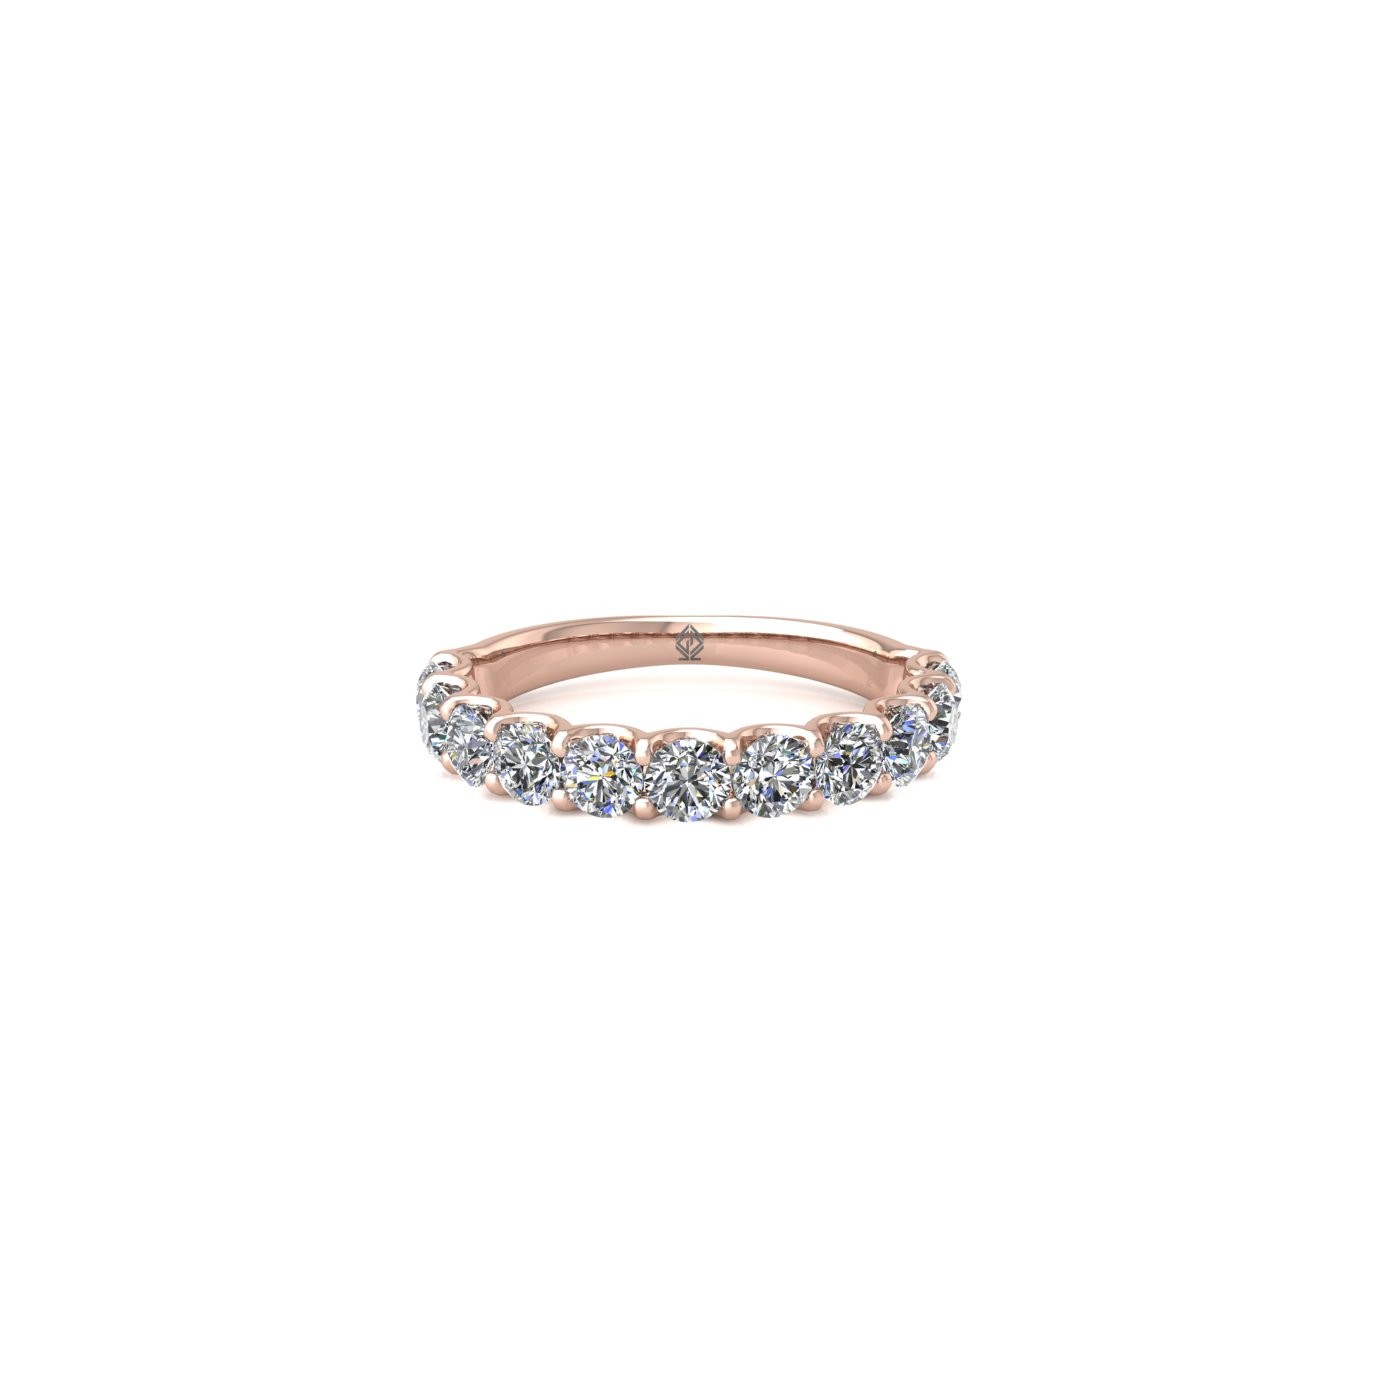 18k white gold  round shape diamond half eternity ring in u-prong setting Photos & images